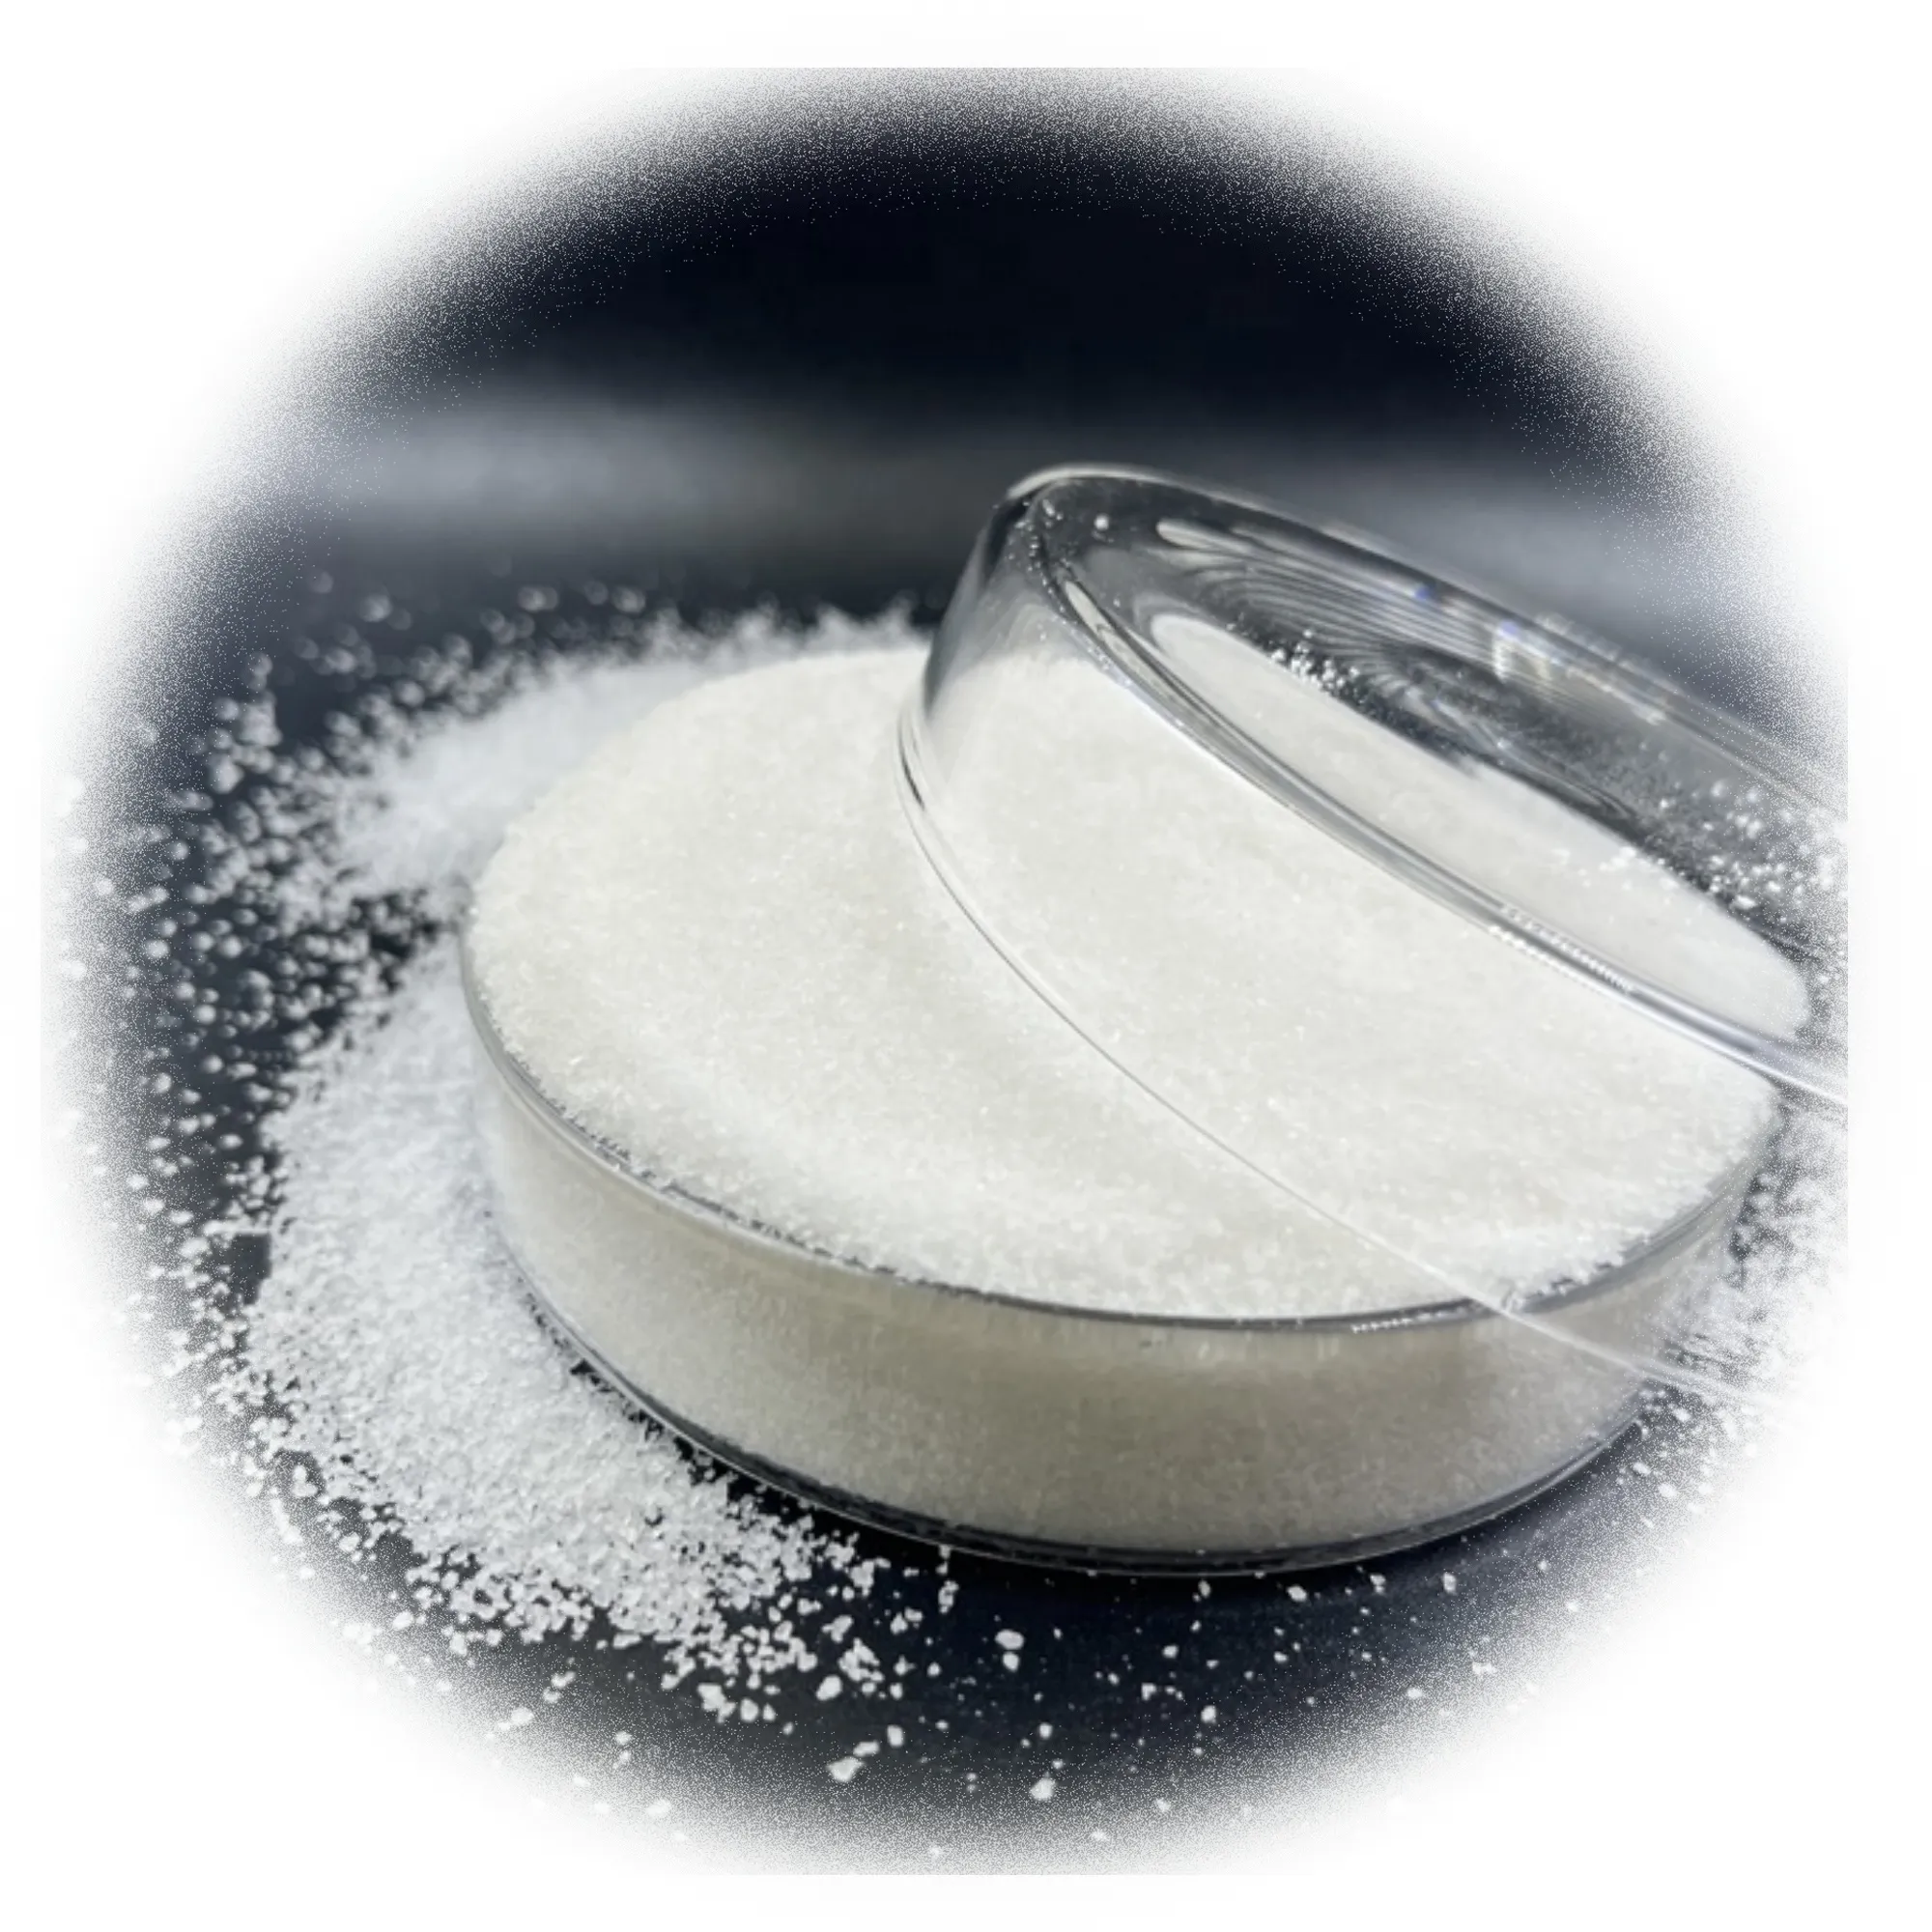 Pó branco de poliacrilamida para refino de açúcar, agente purificador de água industrial de alto peso molecular